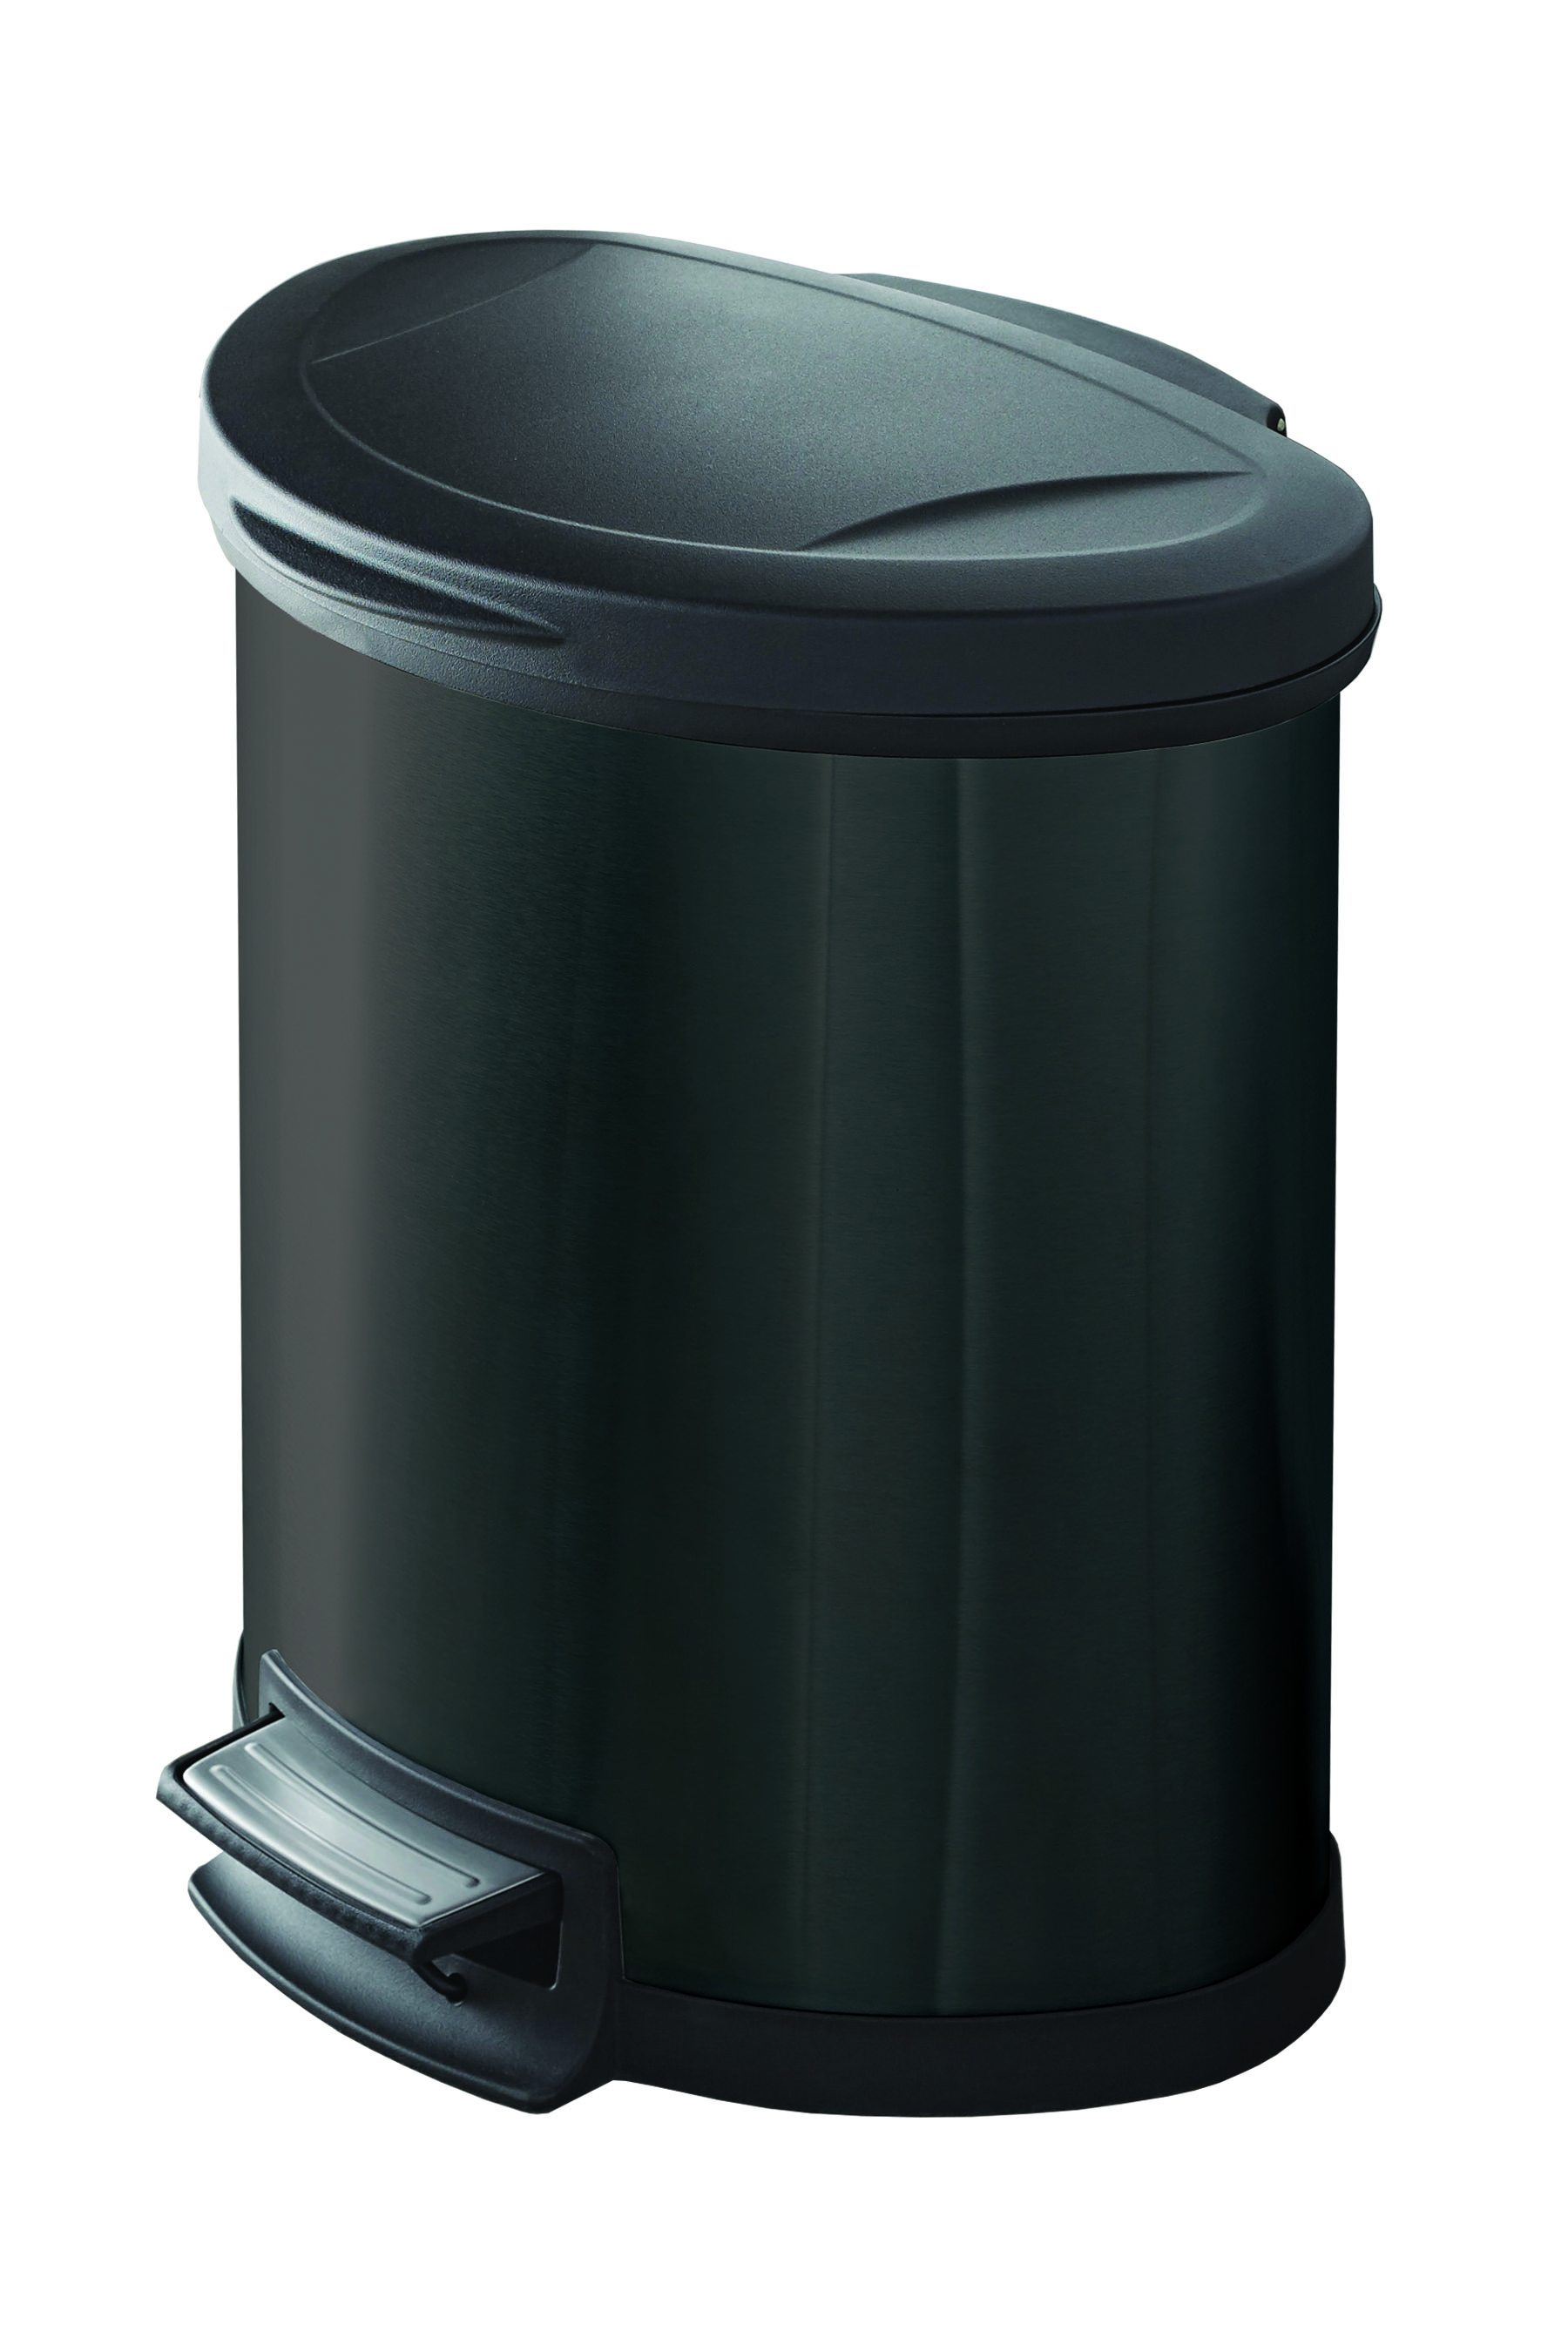 Mainstays 14.2 gal/54 Liter Black Stainless Steel Semi-Round Kitchen Garbage Can - image 1 of 5